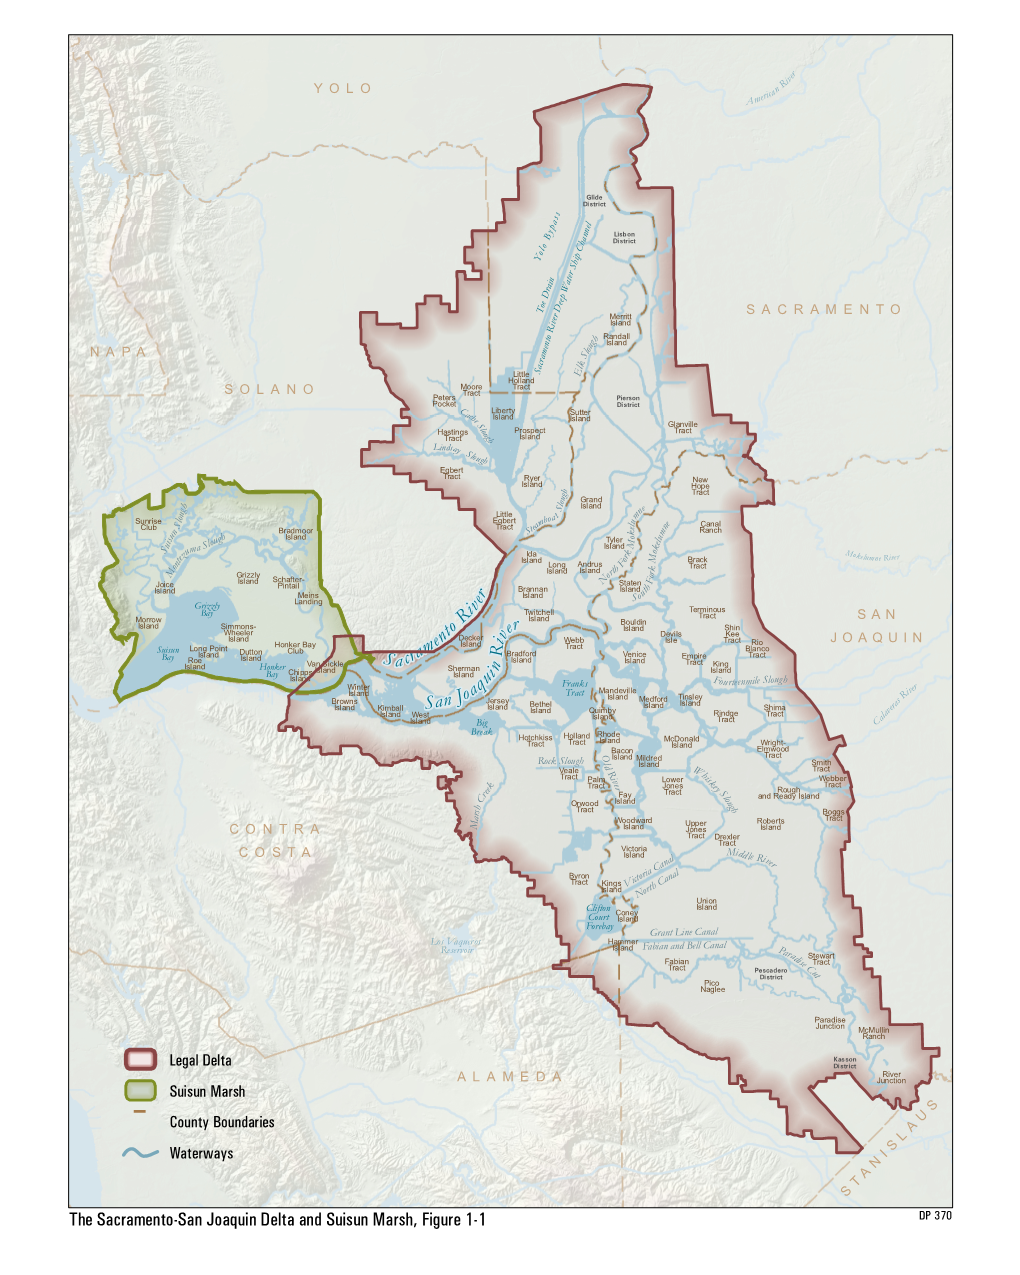 The Sacramento-San Joaquin Delta and Suisun Marsh, Figure 1-1 DP 370